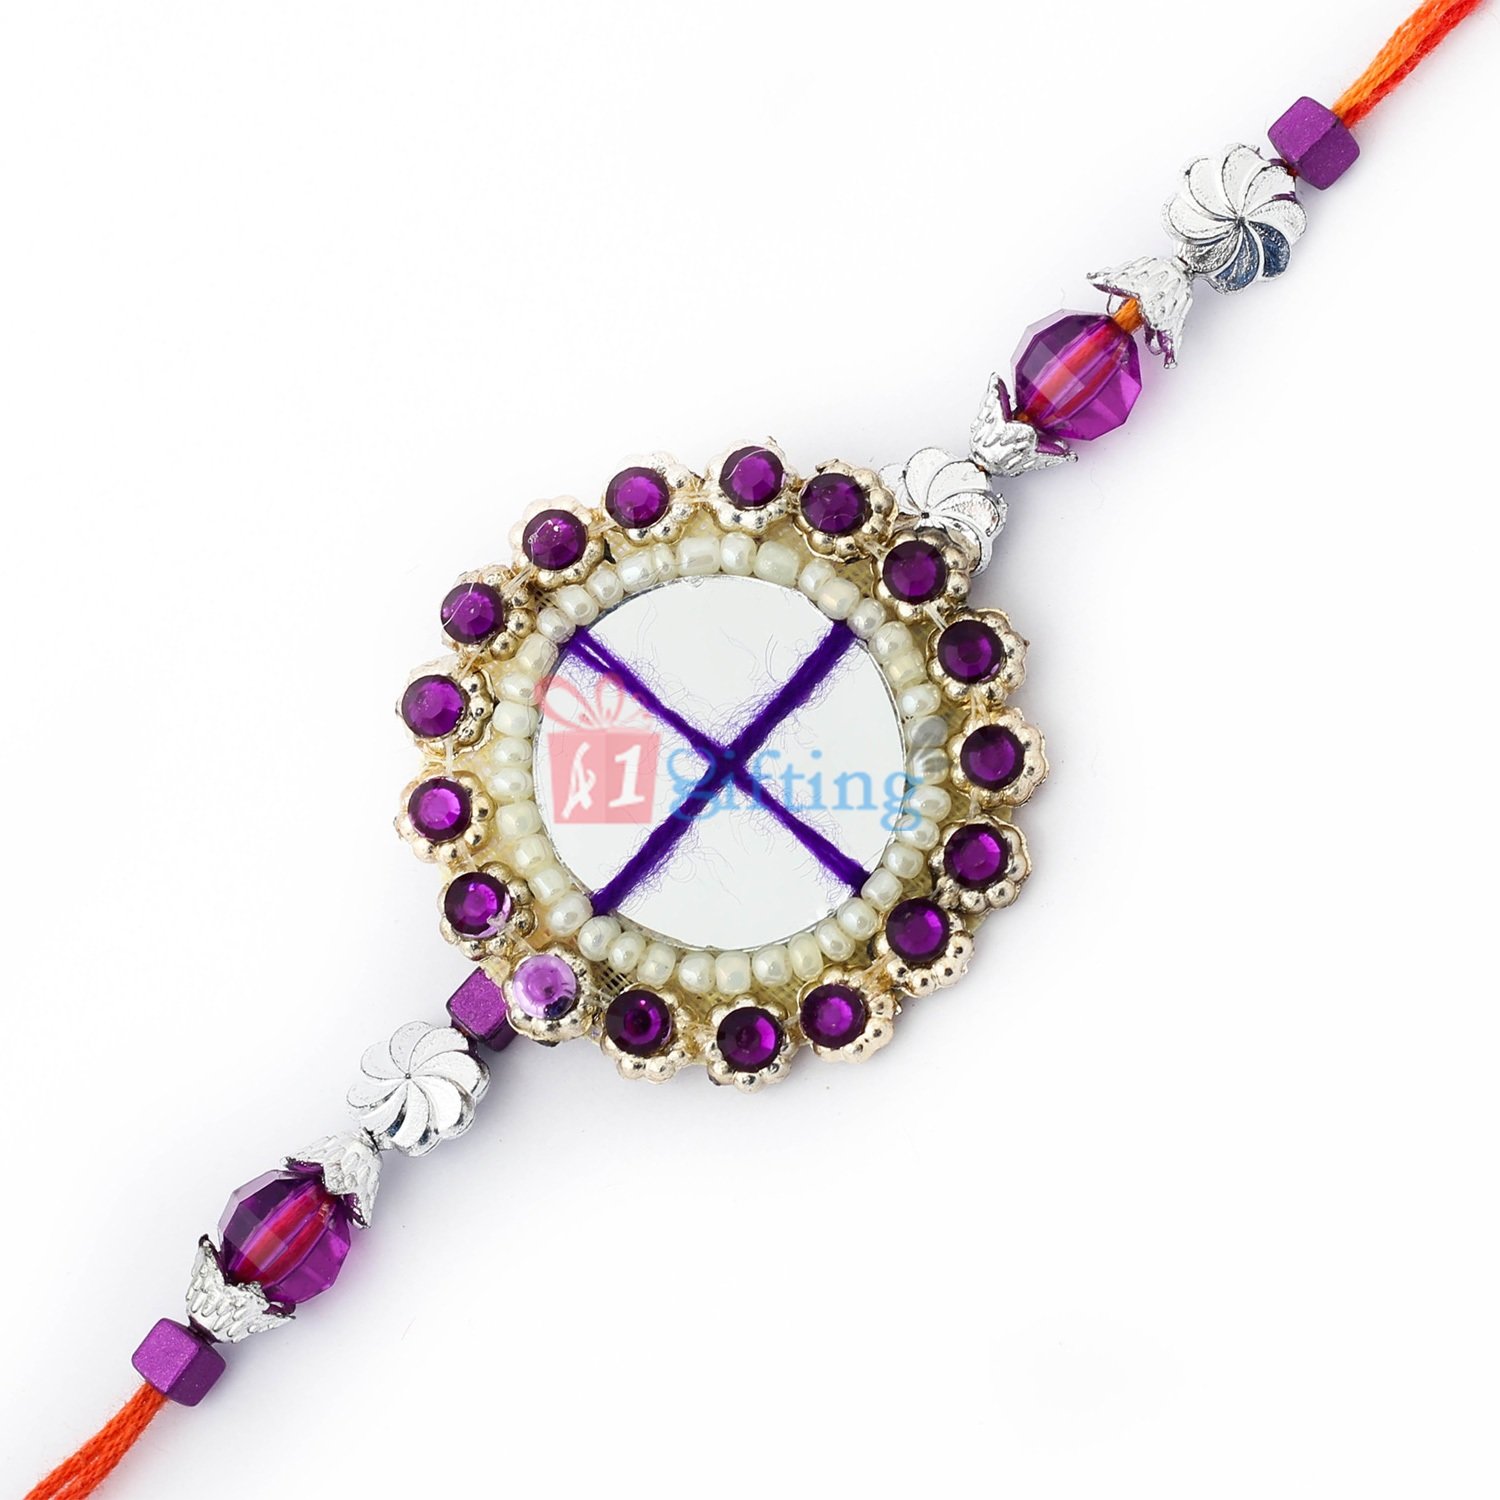 Royal Jaipuri handmade glass Rakhi with purple crystals